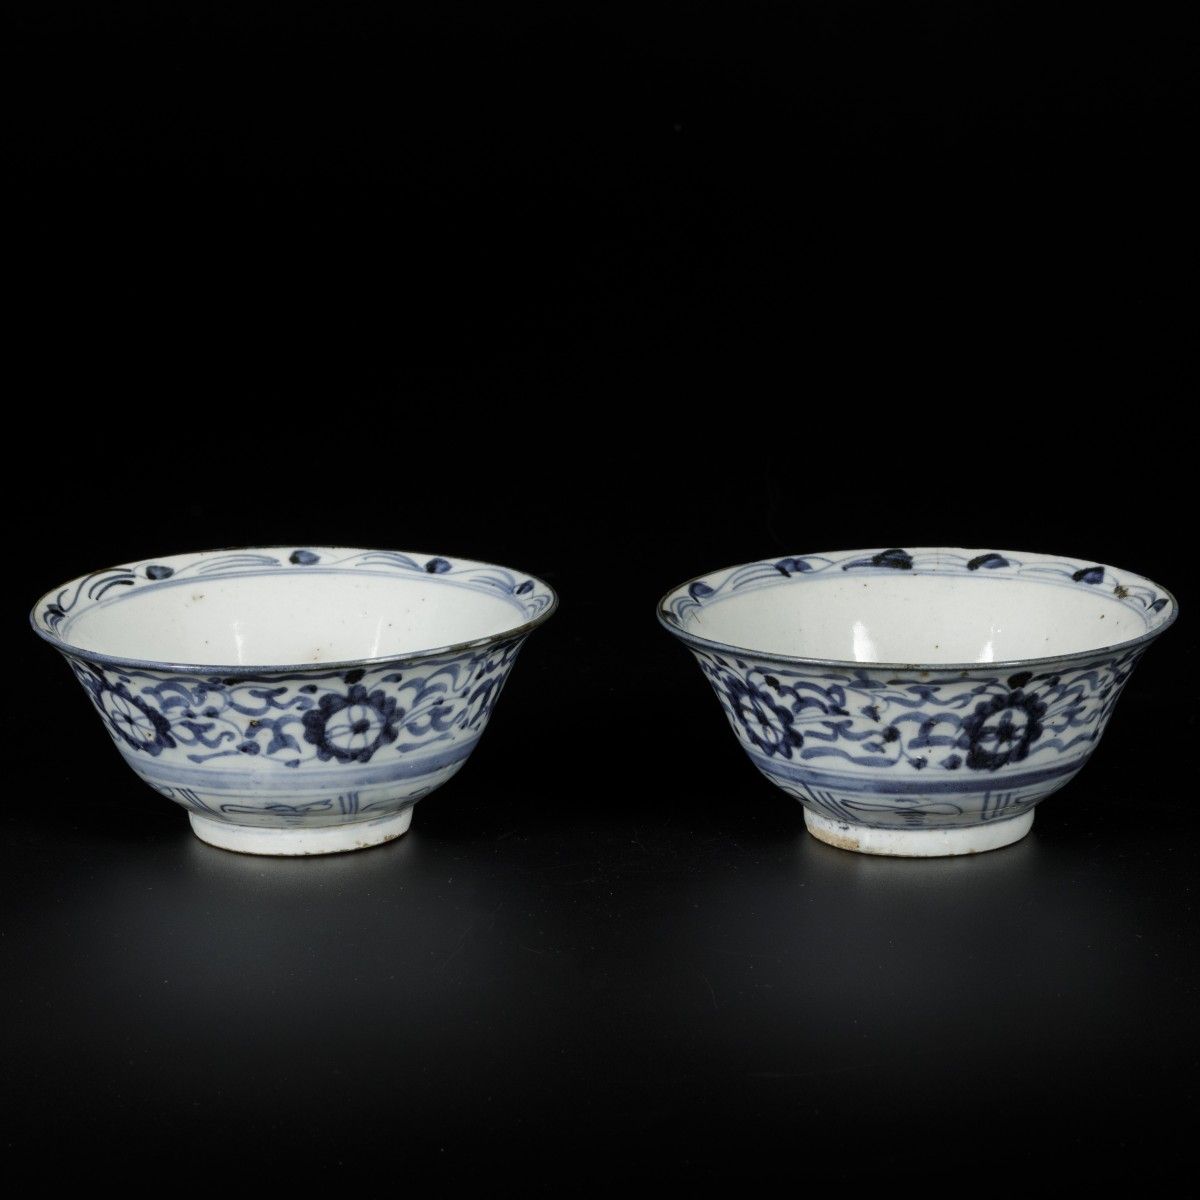 A lot of (2) Swatow bowls, China, 19th century. 直径16.5厘米。缺口和毛边。估计：50 - 100欧元。